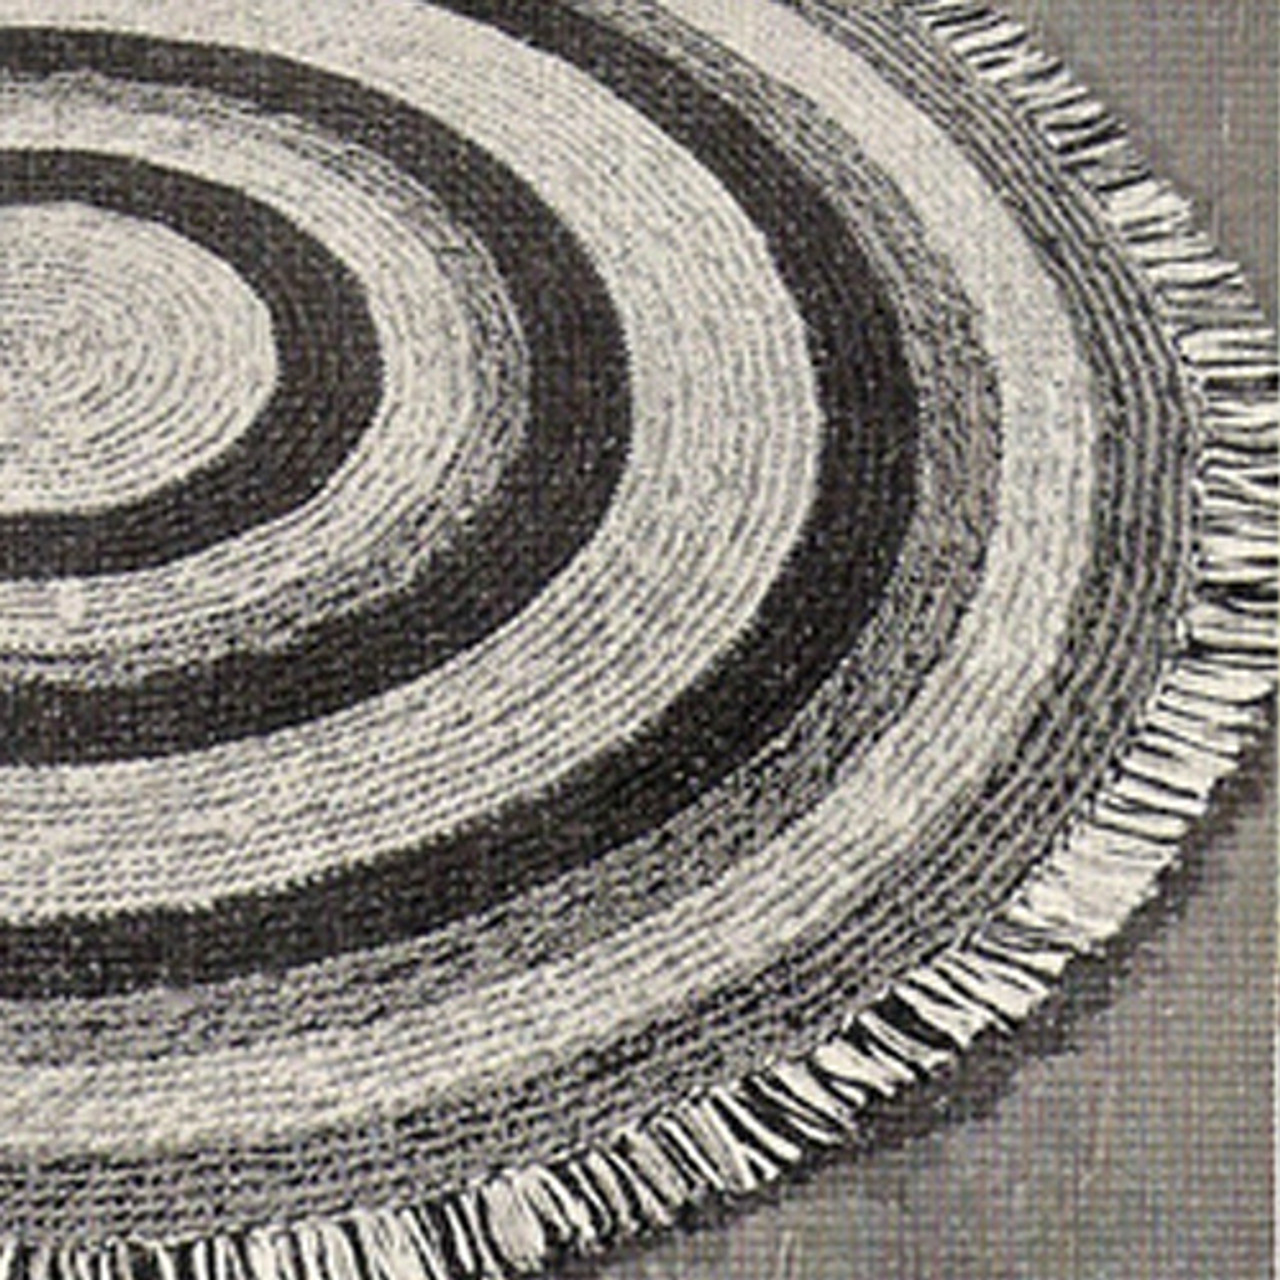 Crochet Rug Pattern, Round Crochet Carpet Pattern, Big Scale